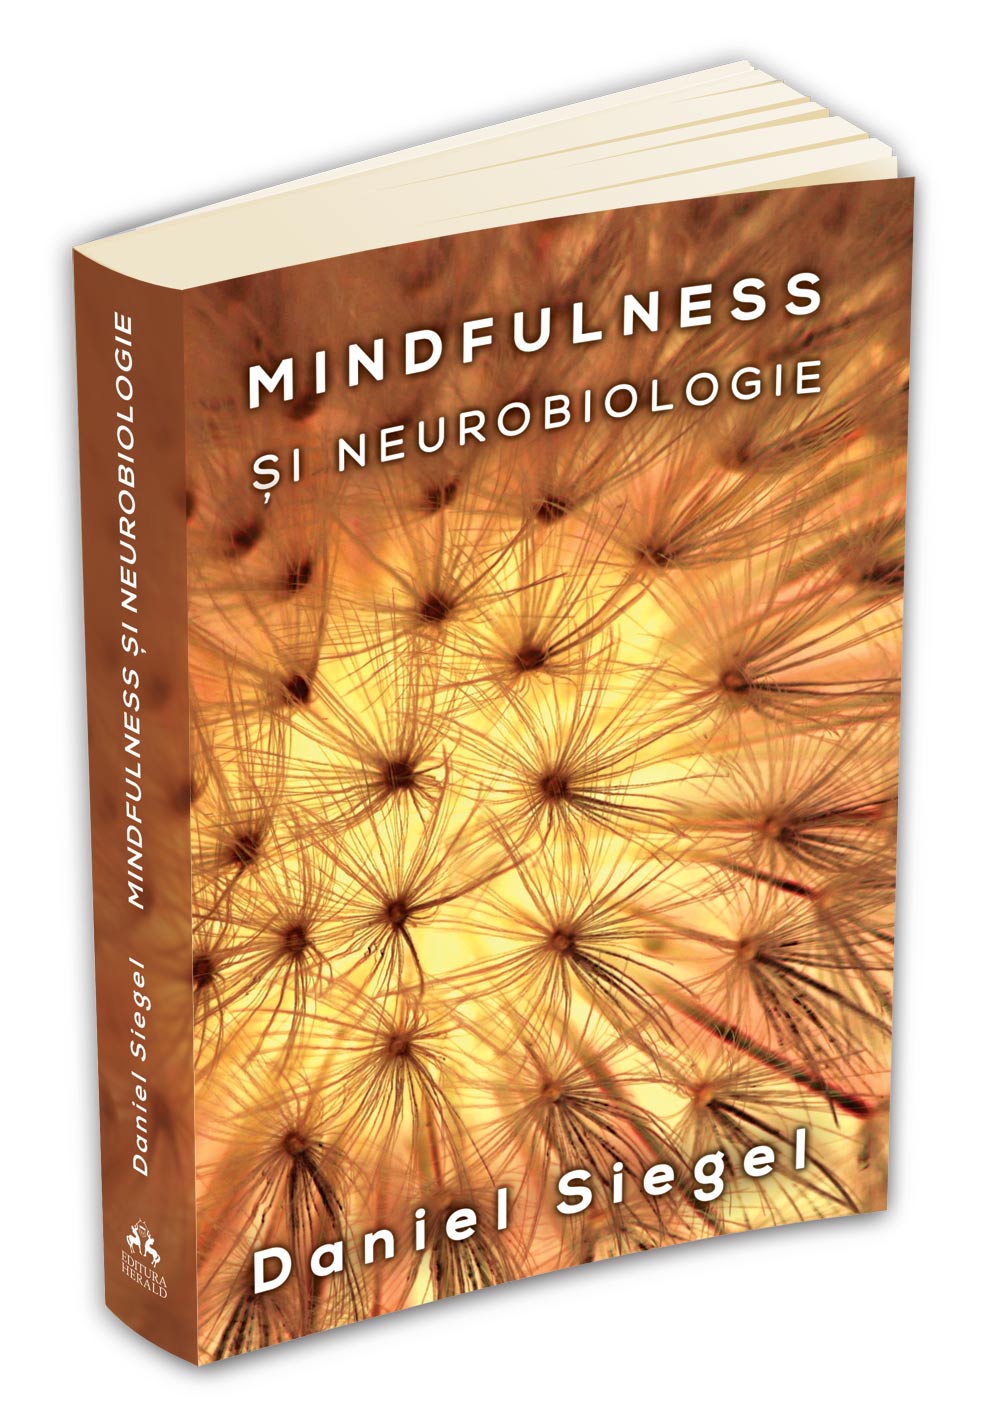 Mindfulness si neurobiologie | Daniel J. Siegel carturesti.ro poza bestsellers.ro